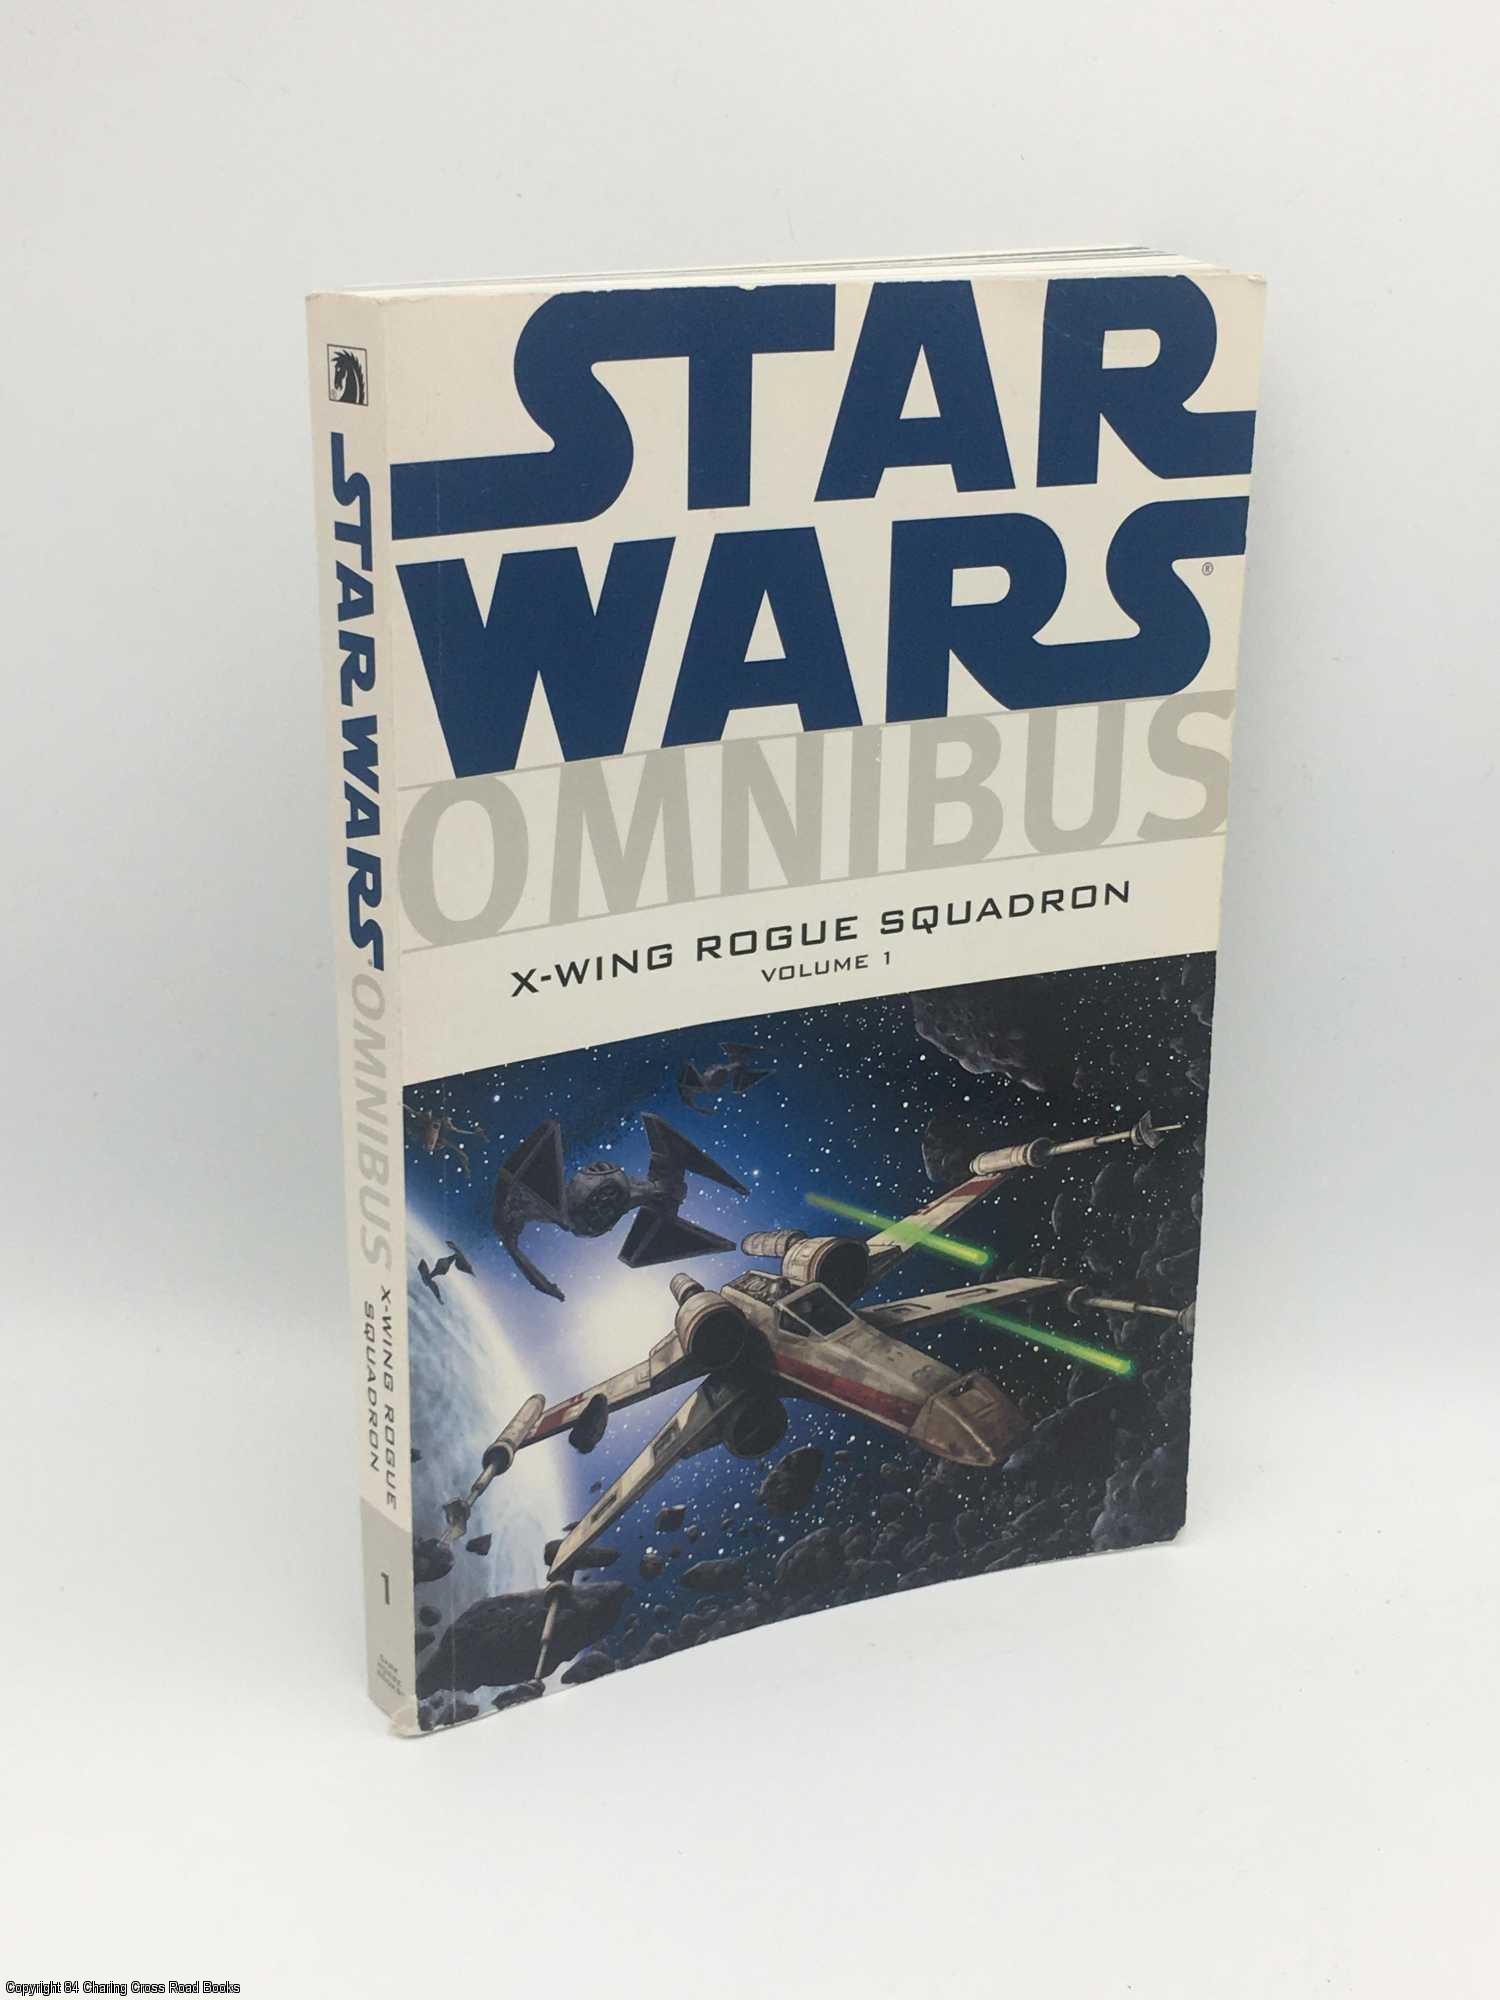 Star Wars: X-Wing Rogue Squadron Omnibus vol 1 - Blackman; Stackpole; Baron, et al.